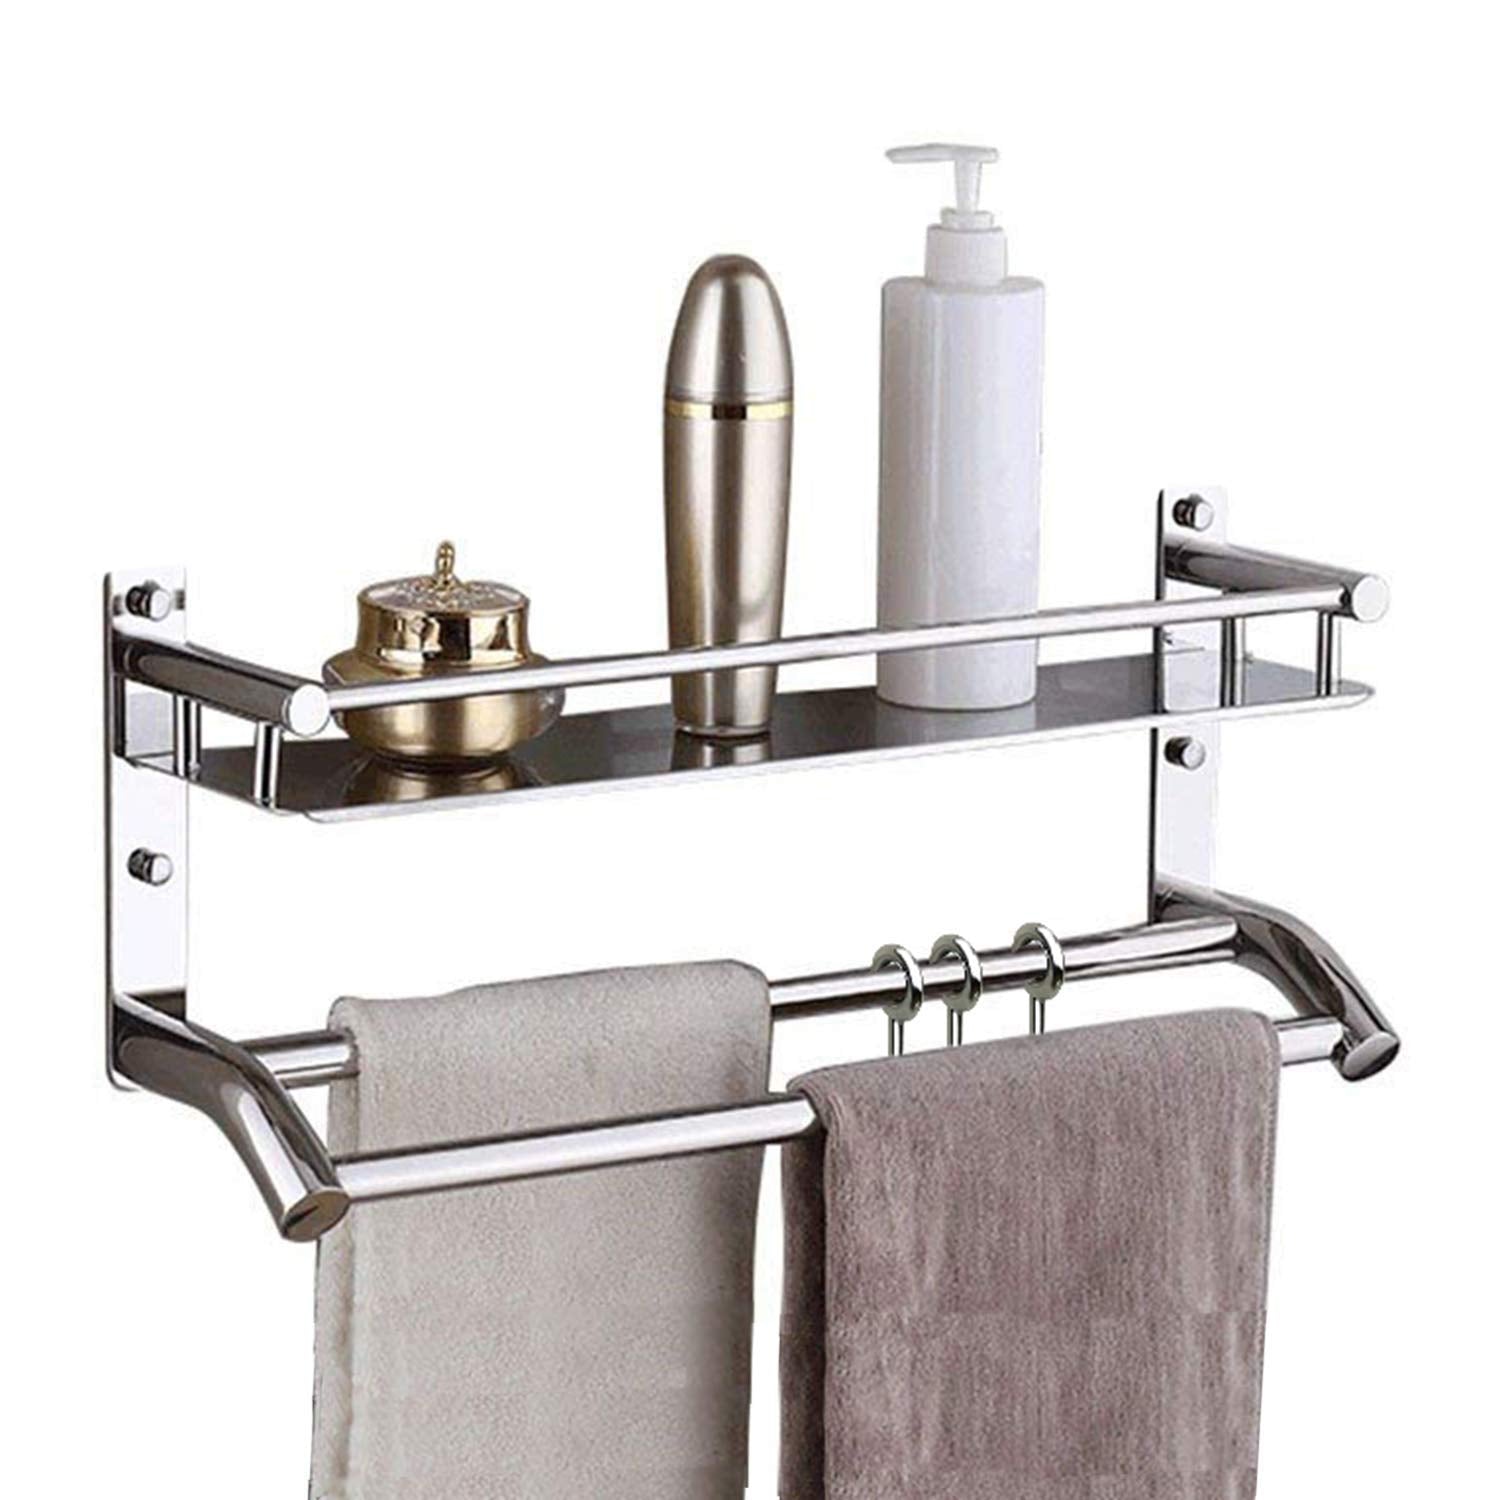 Plantex Stainless Steel Bathroom Shelf/Rack with Towel Holder/Towel Hooks/Bathroom Accessories Wall-Mount (Chrome Finish) (2-Tier)